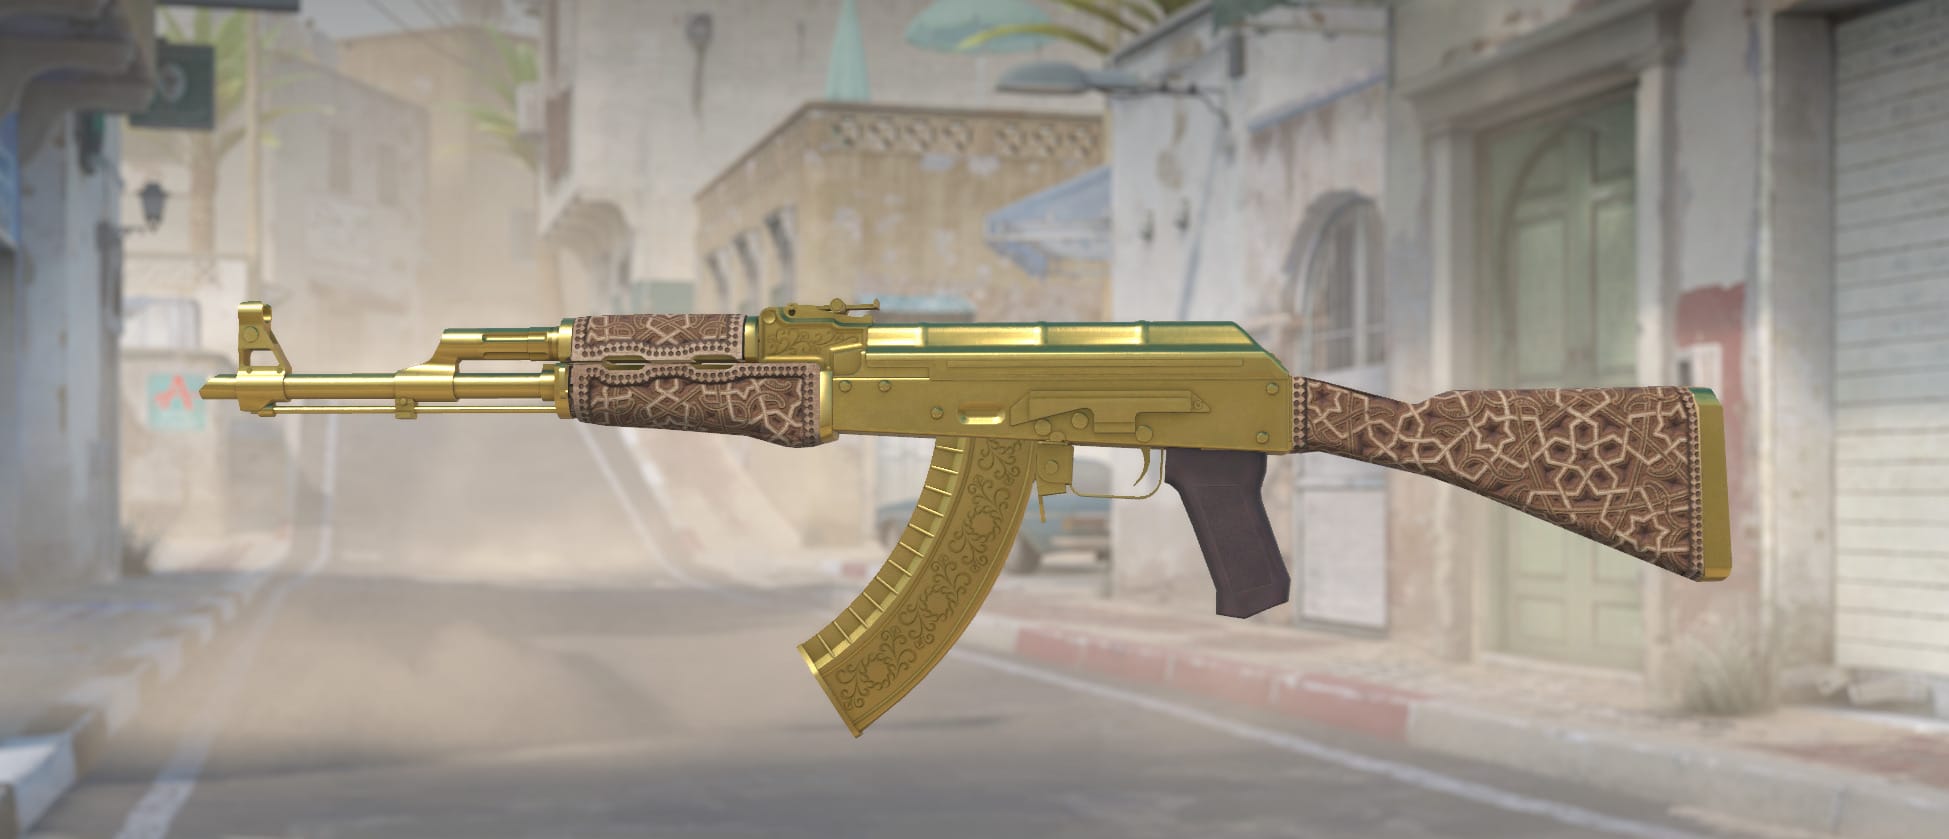 AK-47 Gold Arabesque